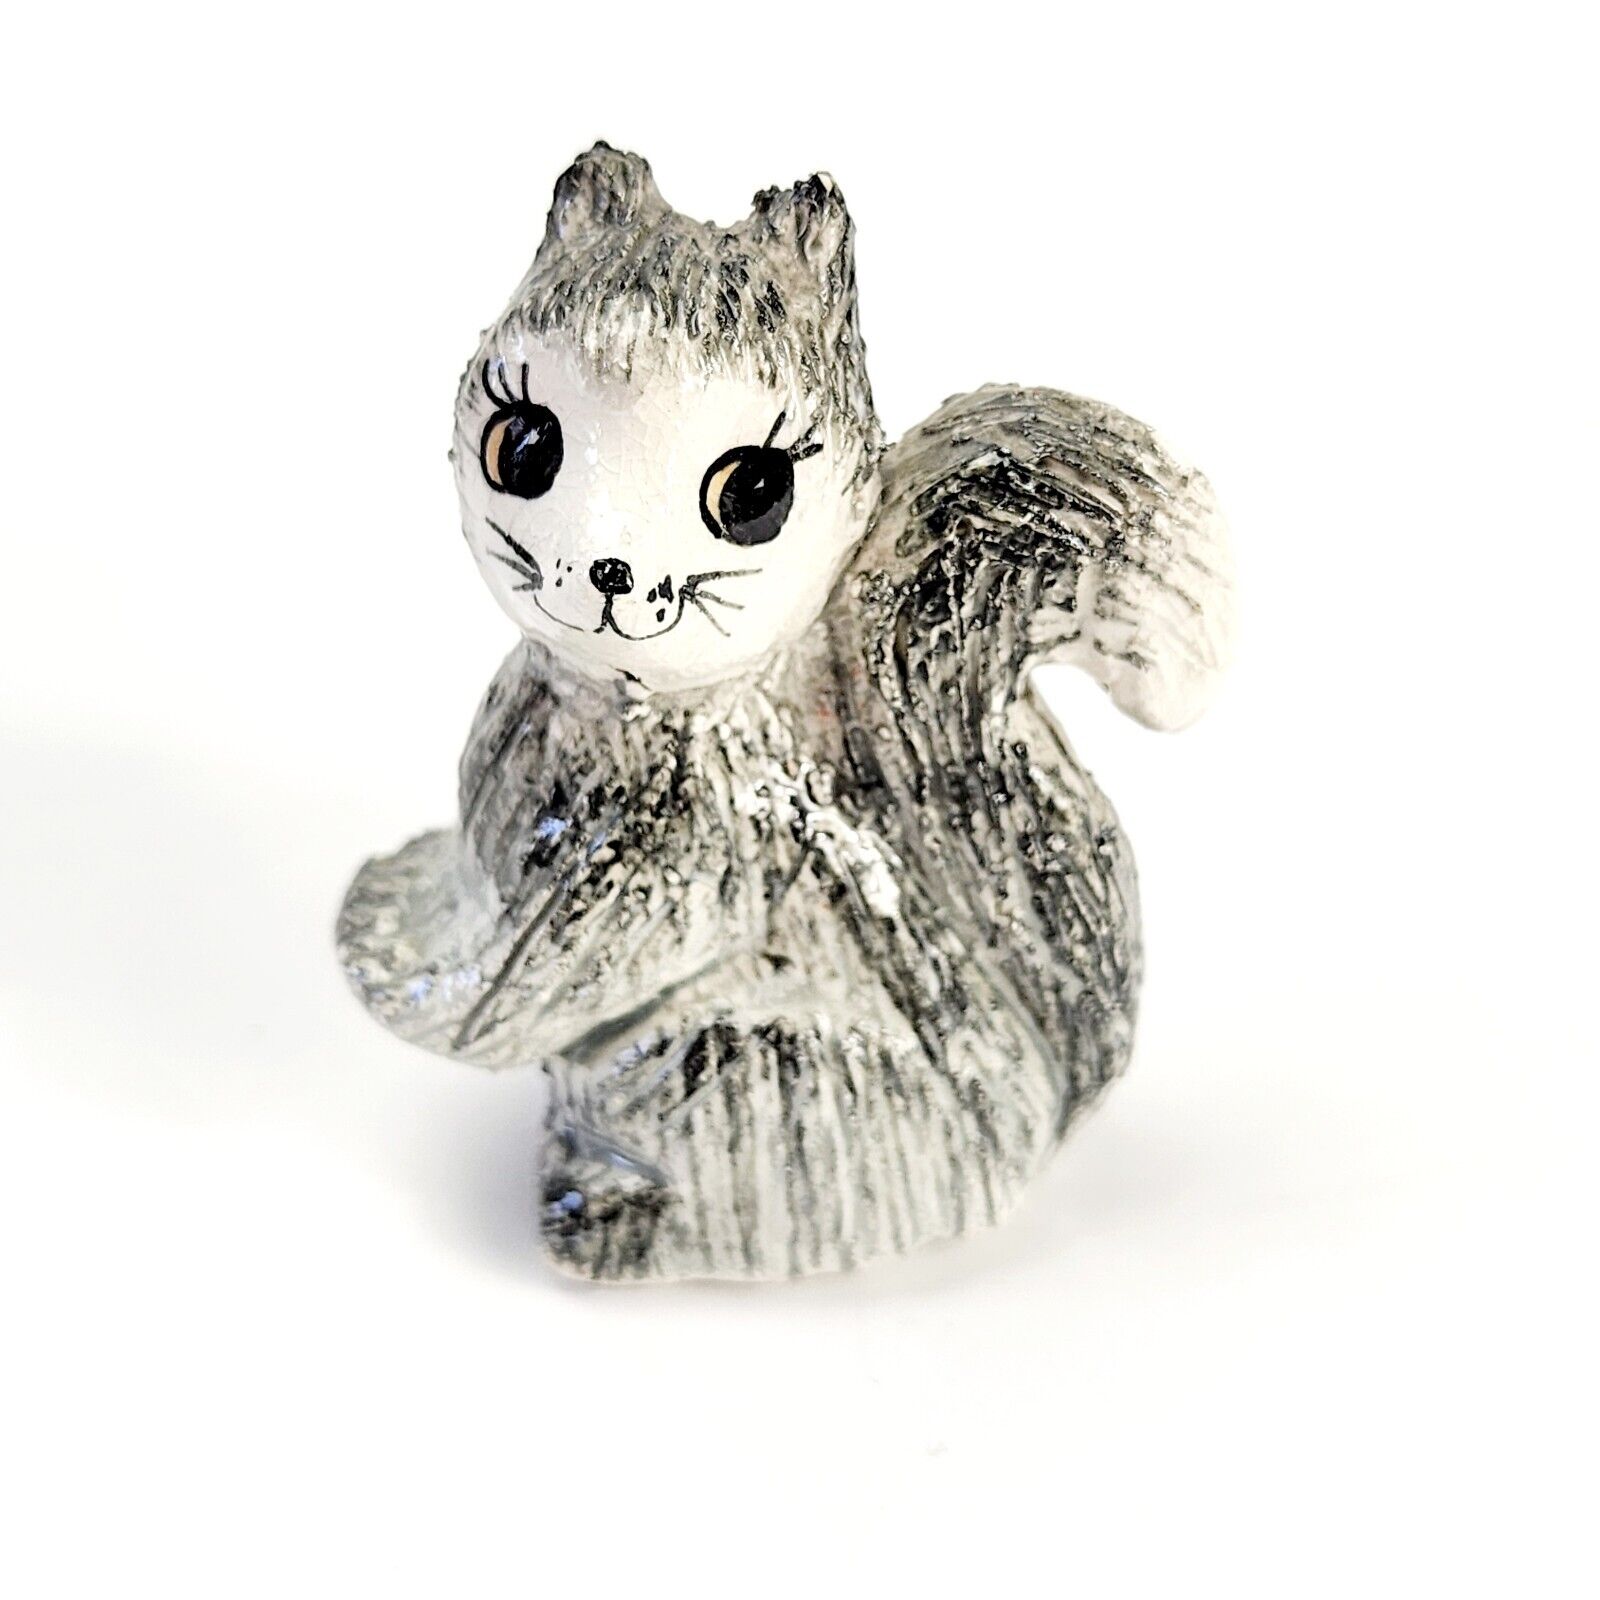 Philip Laureston Miniature Gray And White Squirrel Figurine, Rare Vintage Find